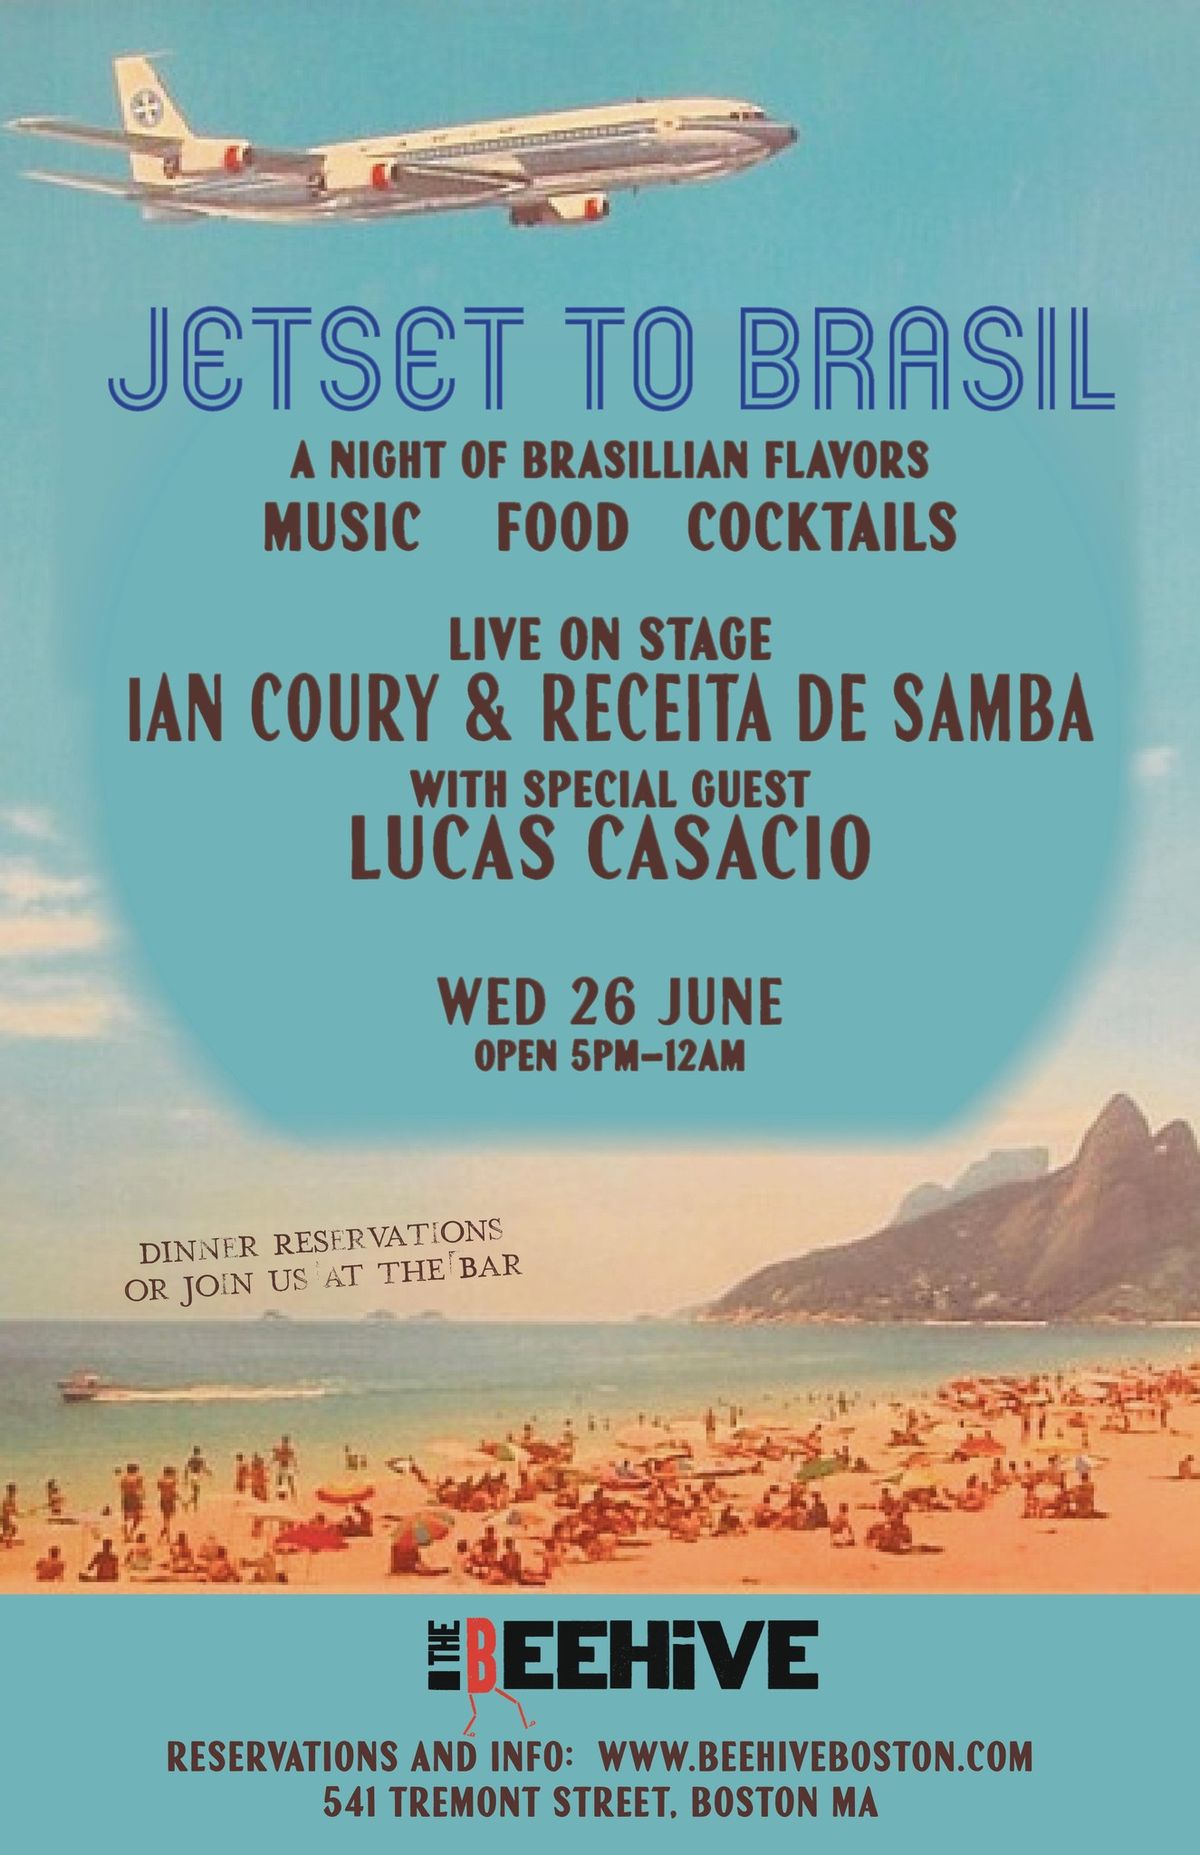 Jetset to Brasil: A Night of Brasillian Flavors